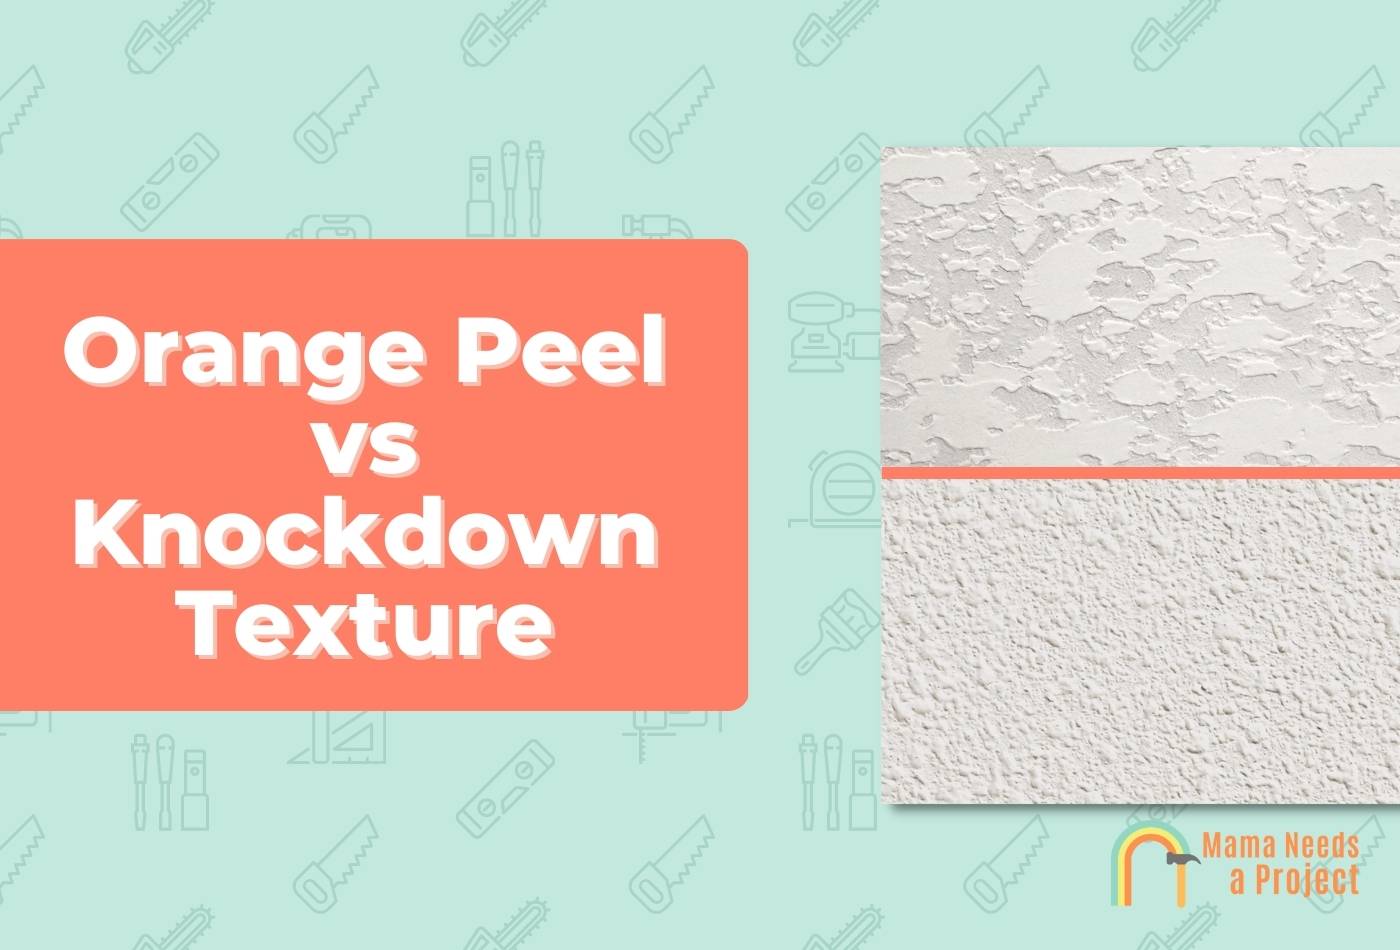 Orange Peel vs Knockdown Texture